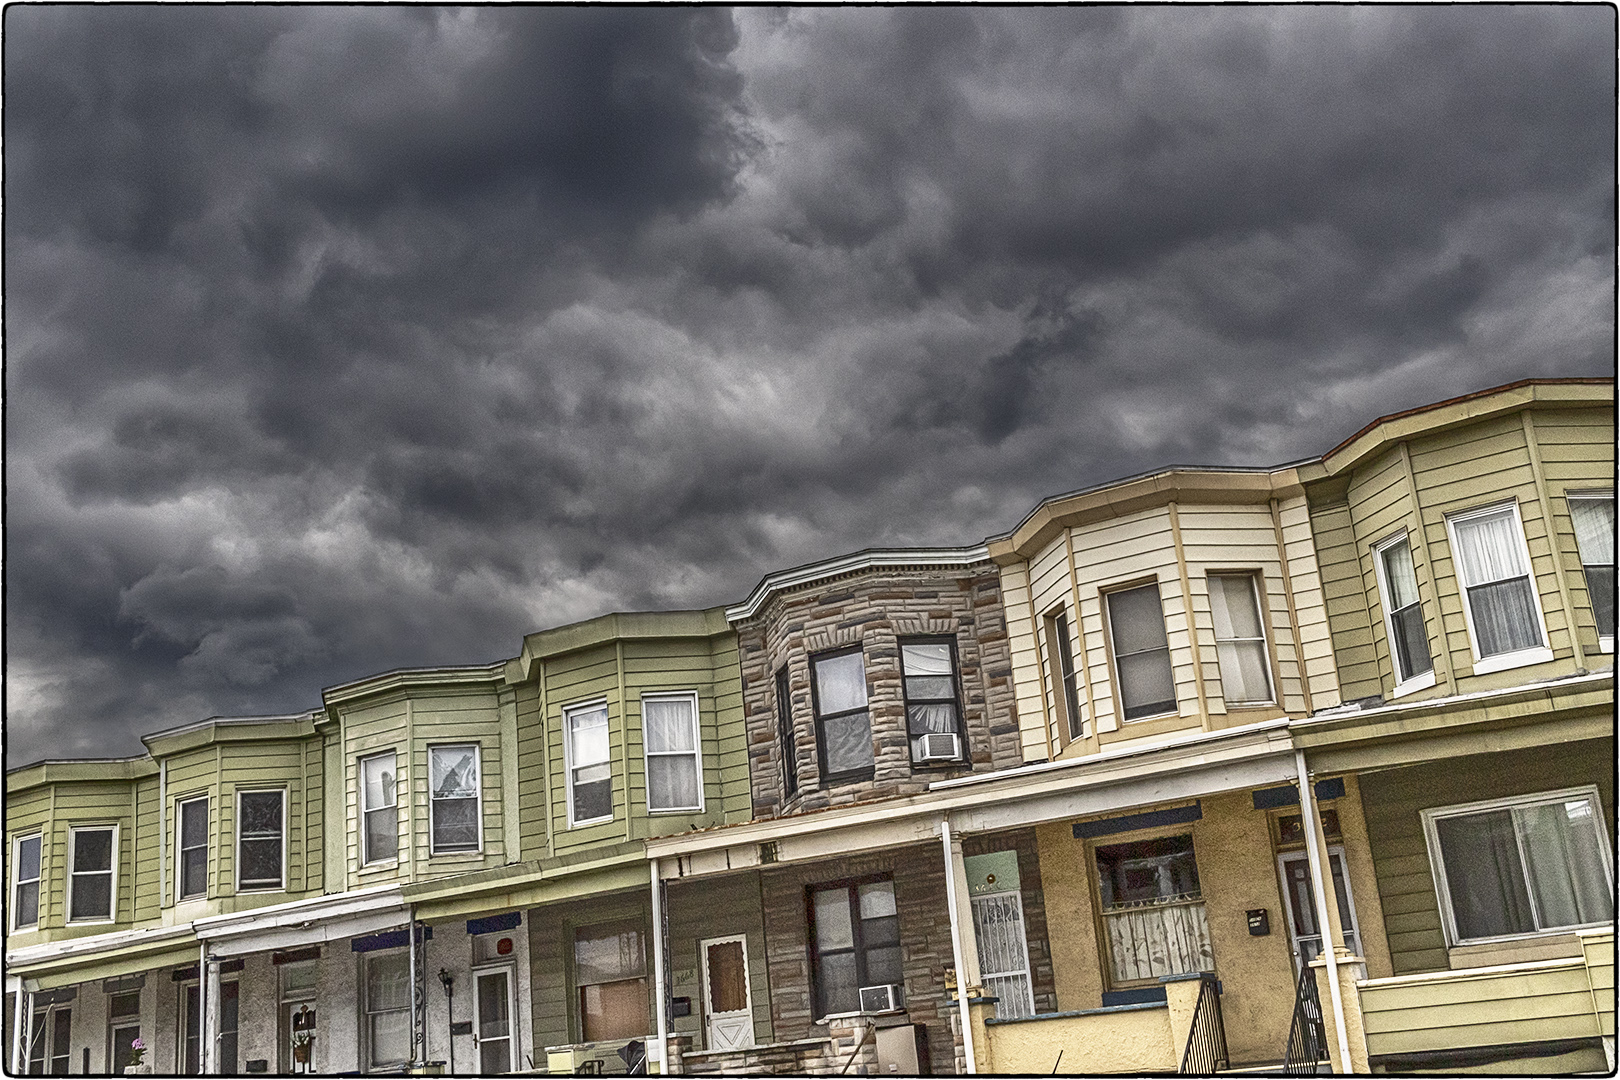 Before The Storm-Photo © Albert Ewing-Baltimore Rowhomes-05-13-2019-Baltimore MD-1.jpg